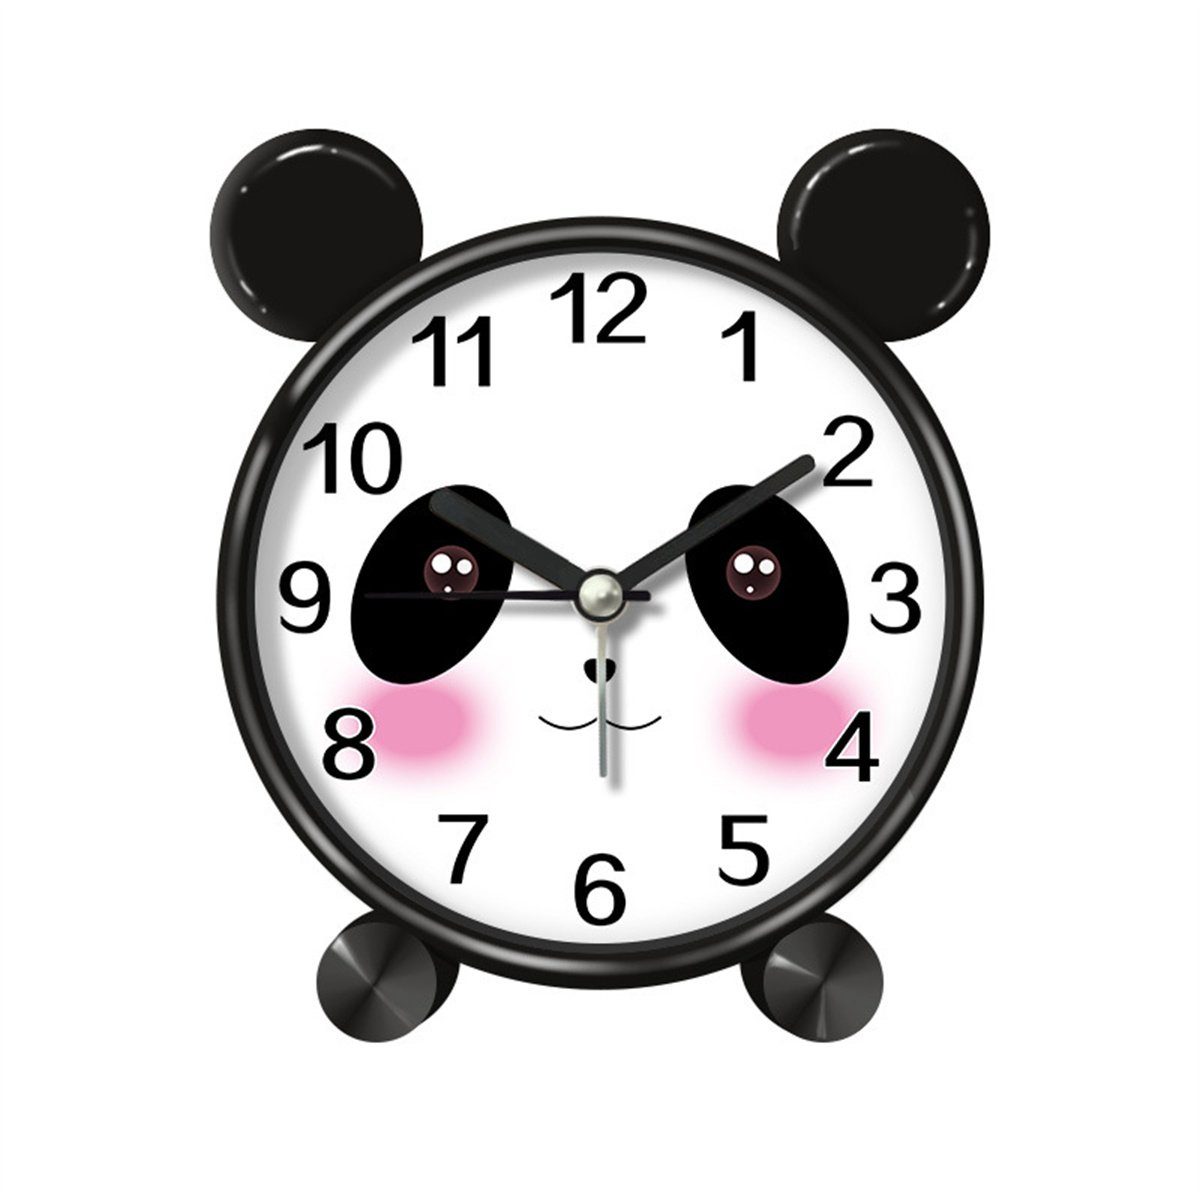 Kinderwecker selected geräuschlos 4-Zoll-Cartoon-Panda-Kinder-Desktop-Wecker, carefully